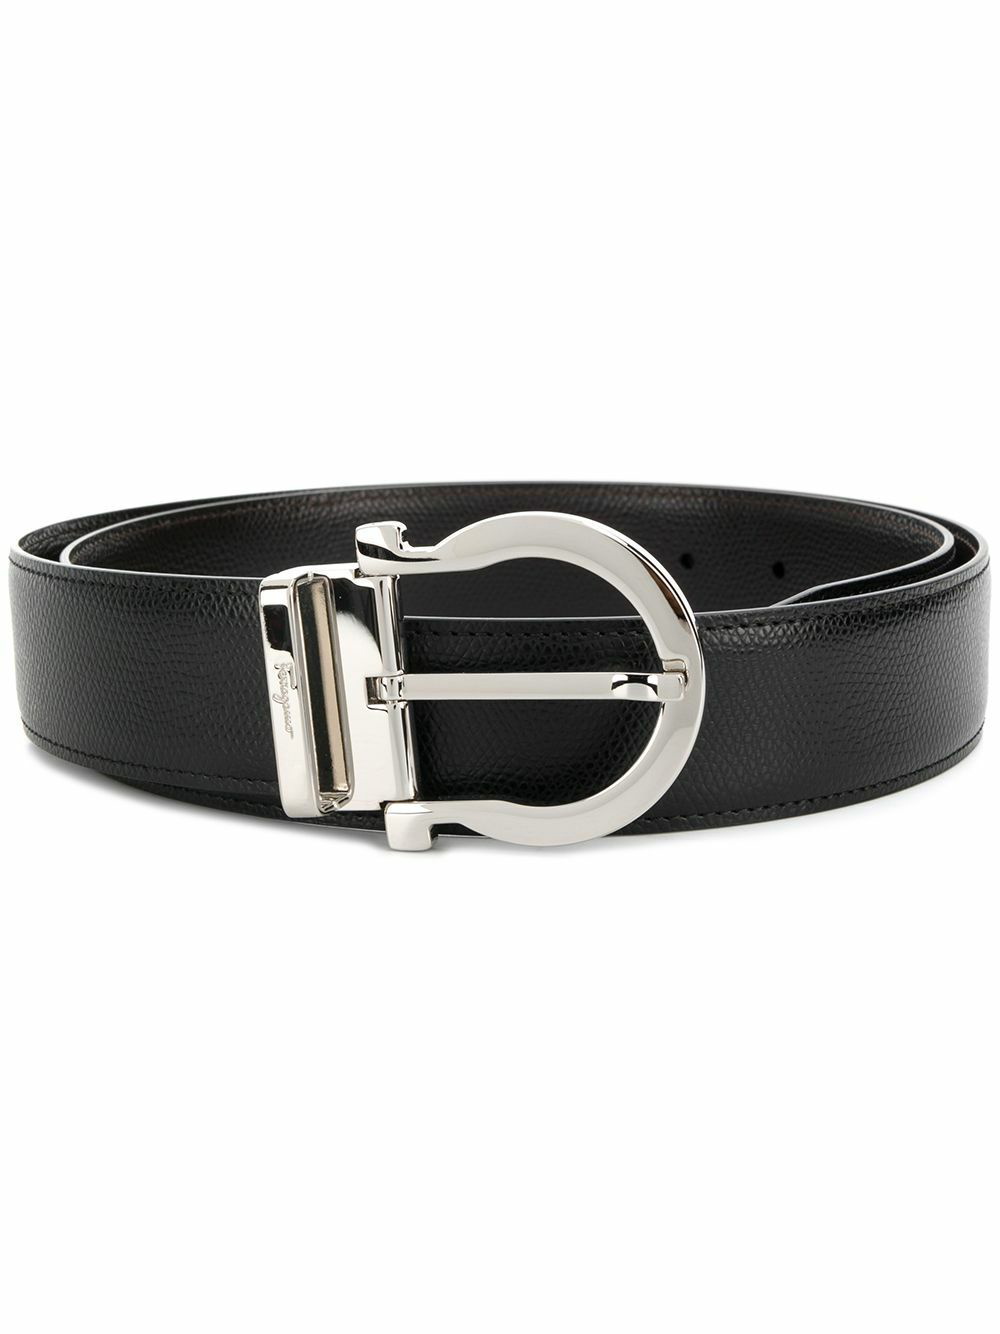 Ferragamo Men's Reversible Leather Belt with Beveled Gancini